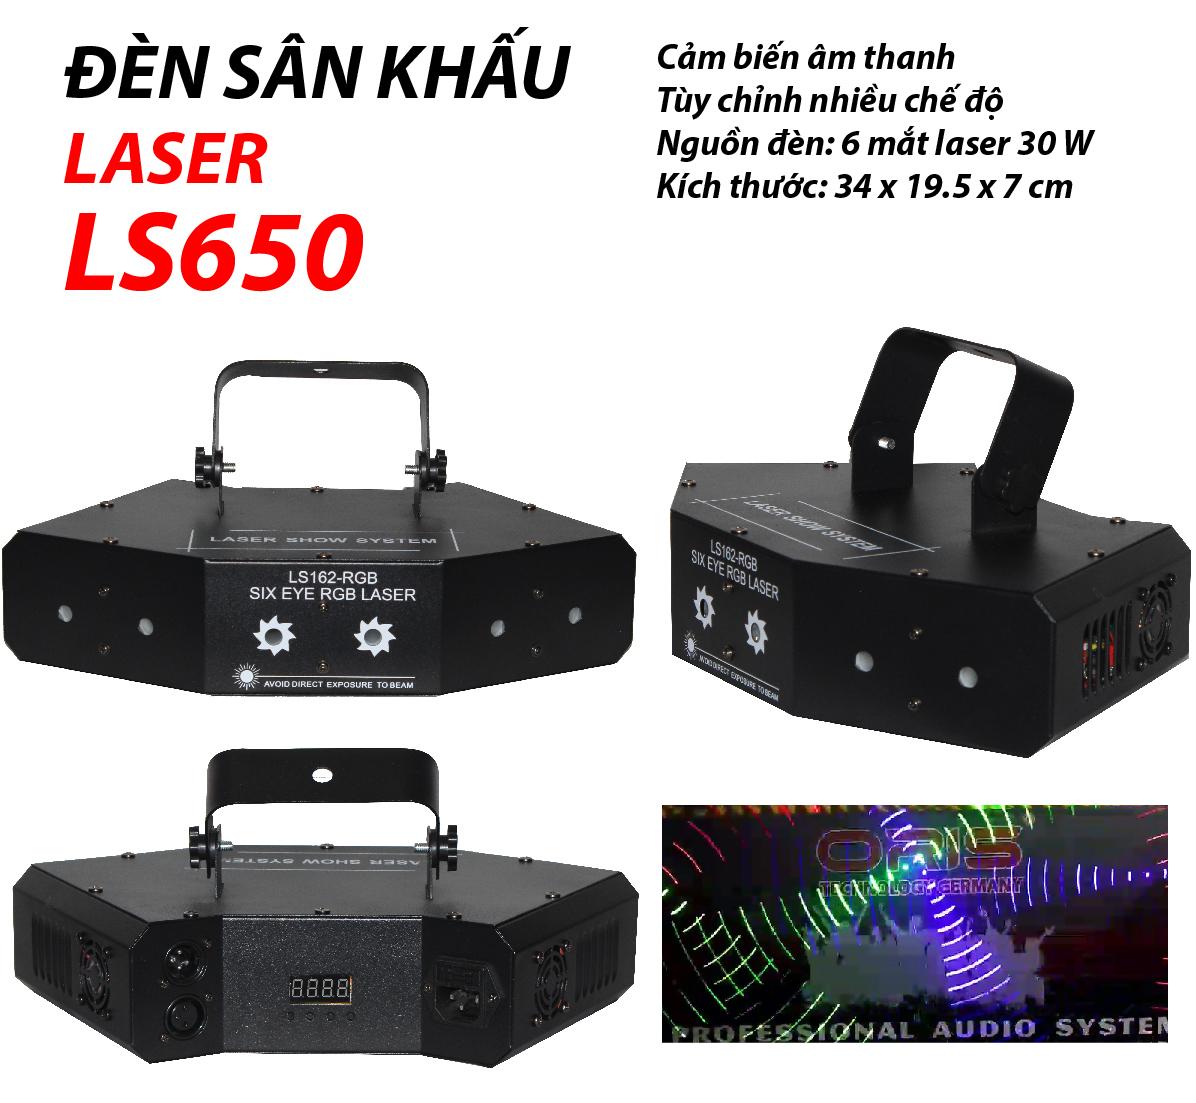 Đèn sân khấu Laser LS650